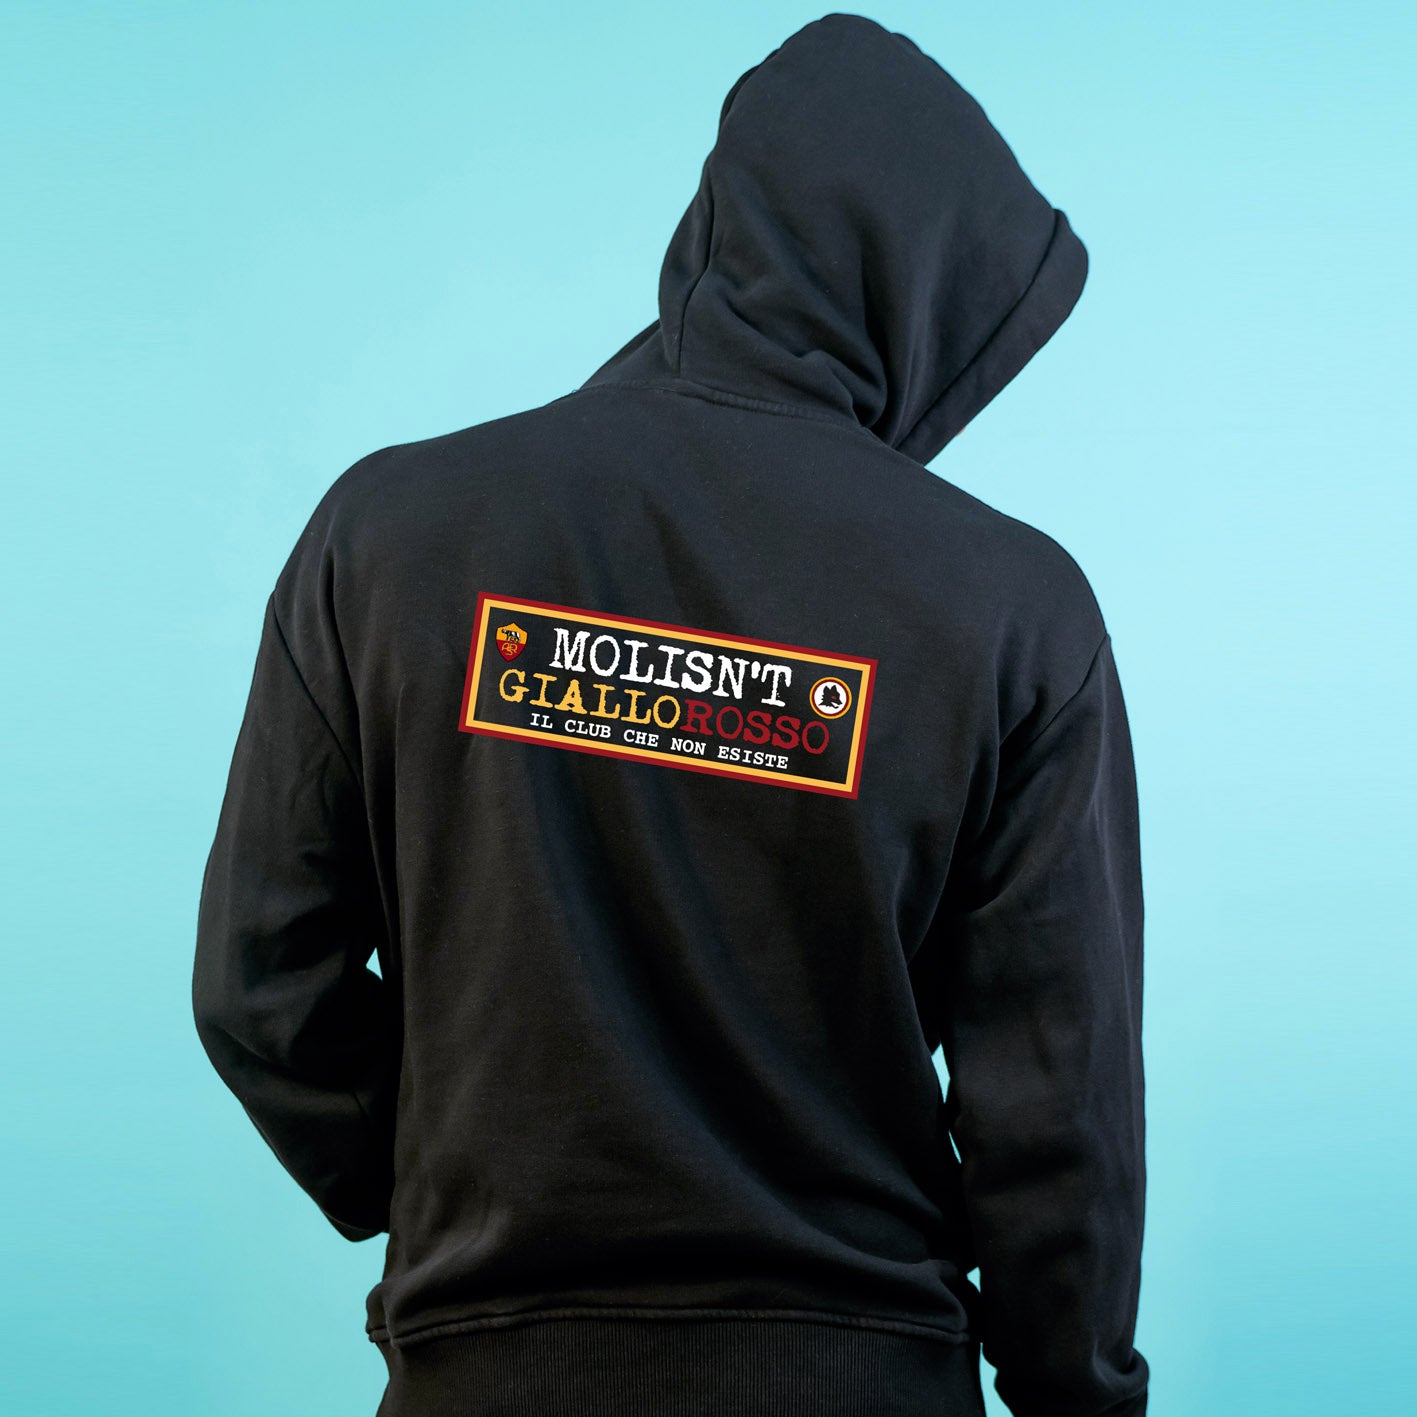 Official "MOLISN'T" hoodie